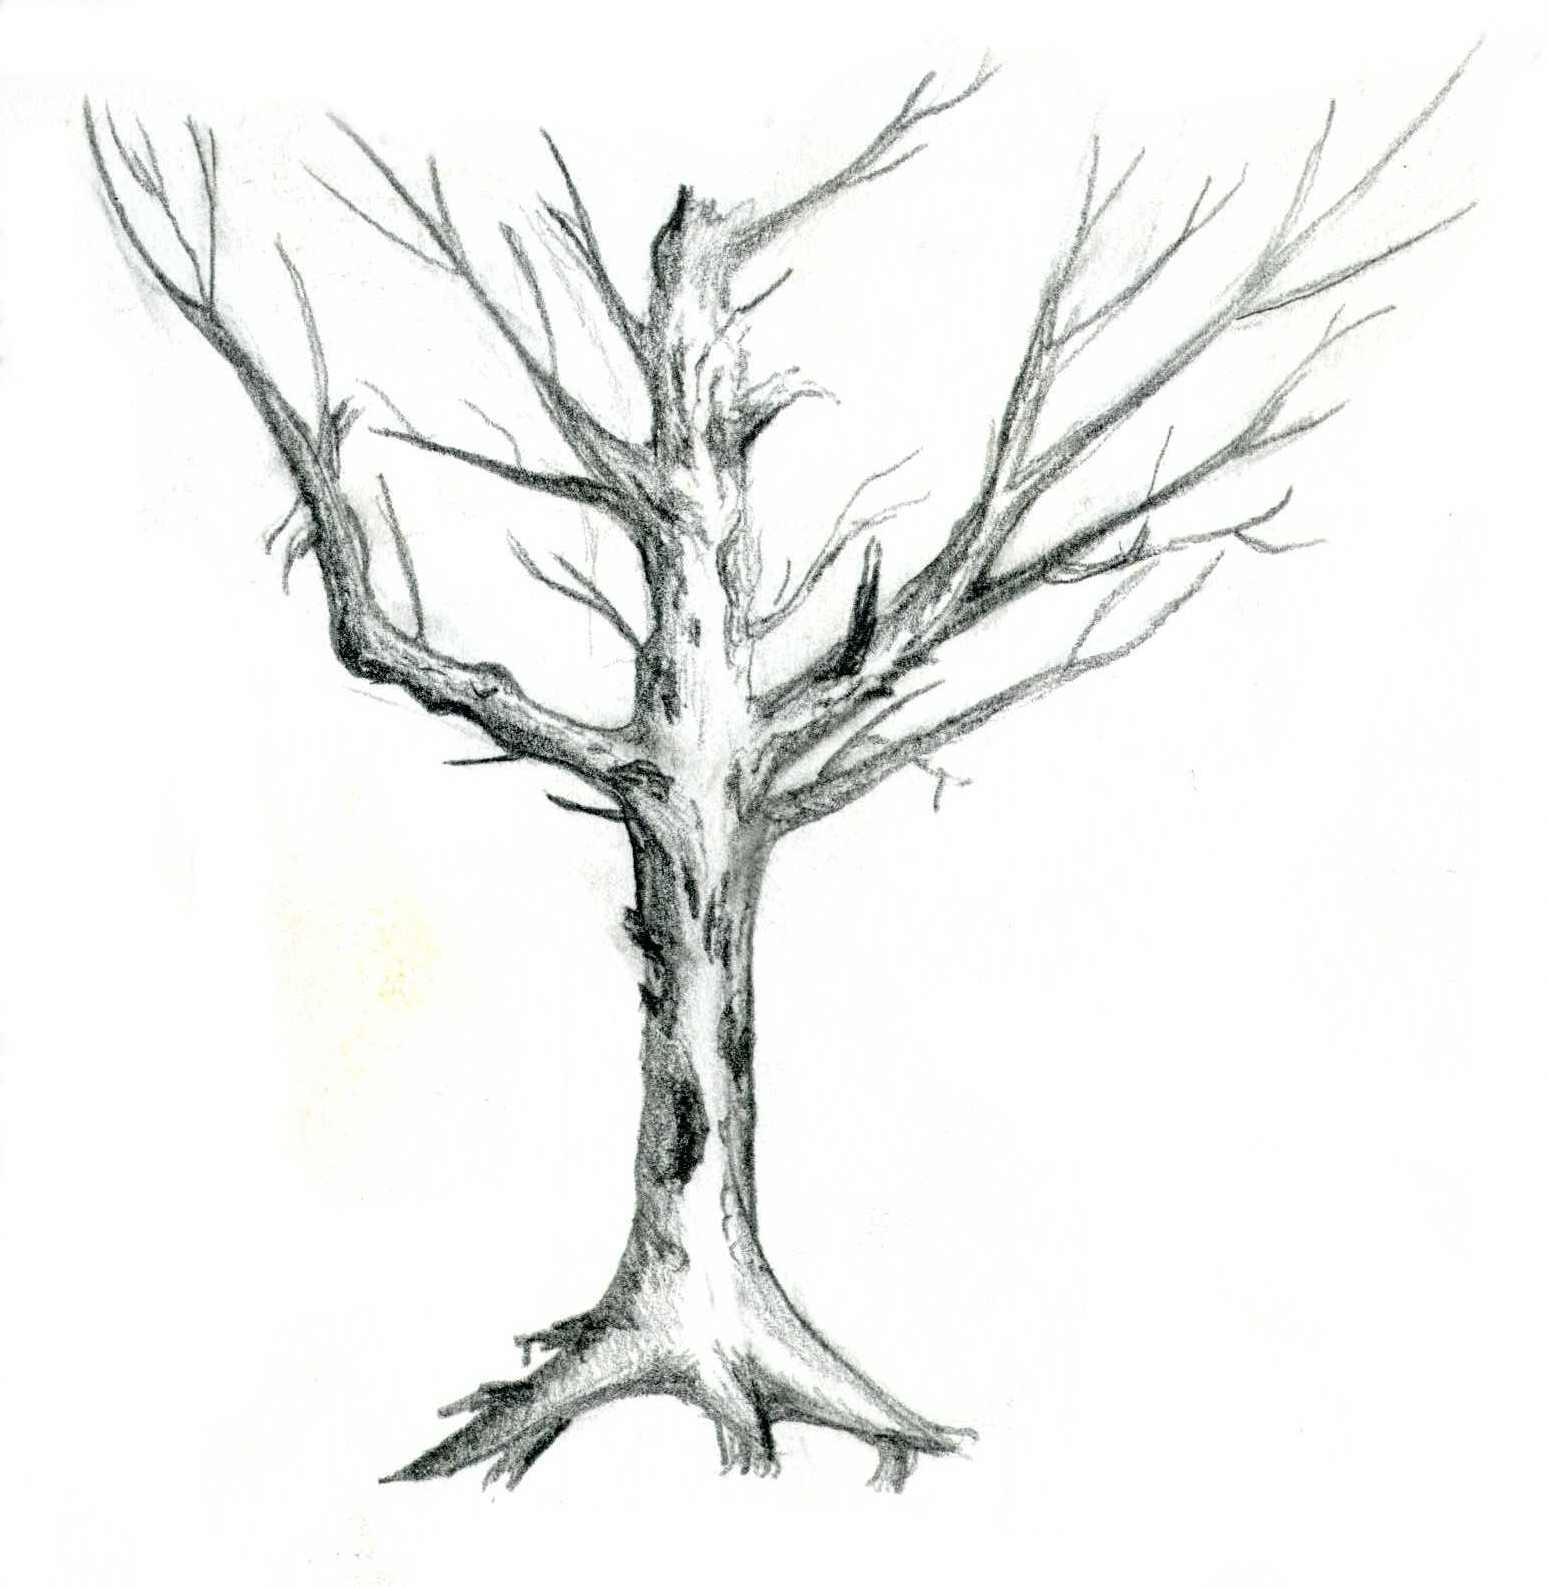 Dead tree by Vidkym on DeviantArt